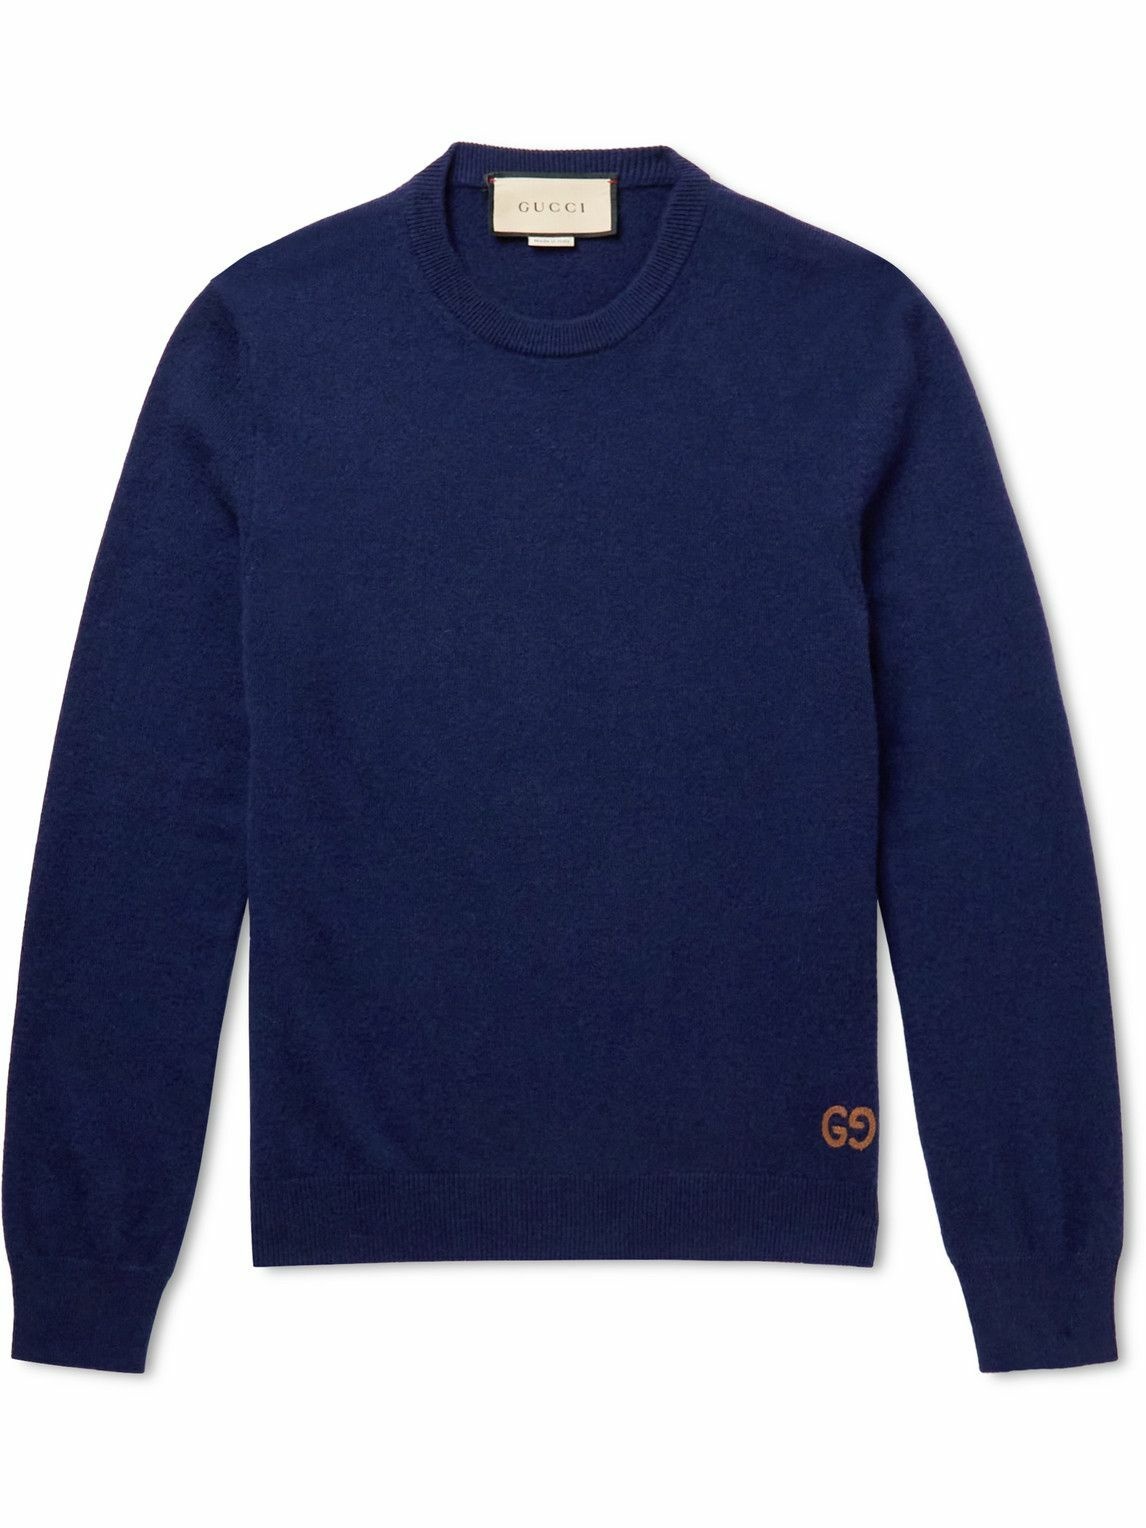 GUCCI - Logo-embroidered cashmere sweater - Blue Gucci